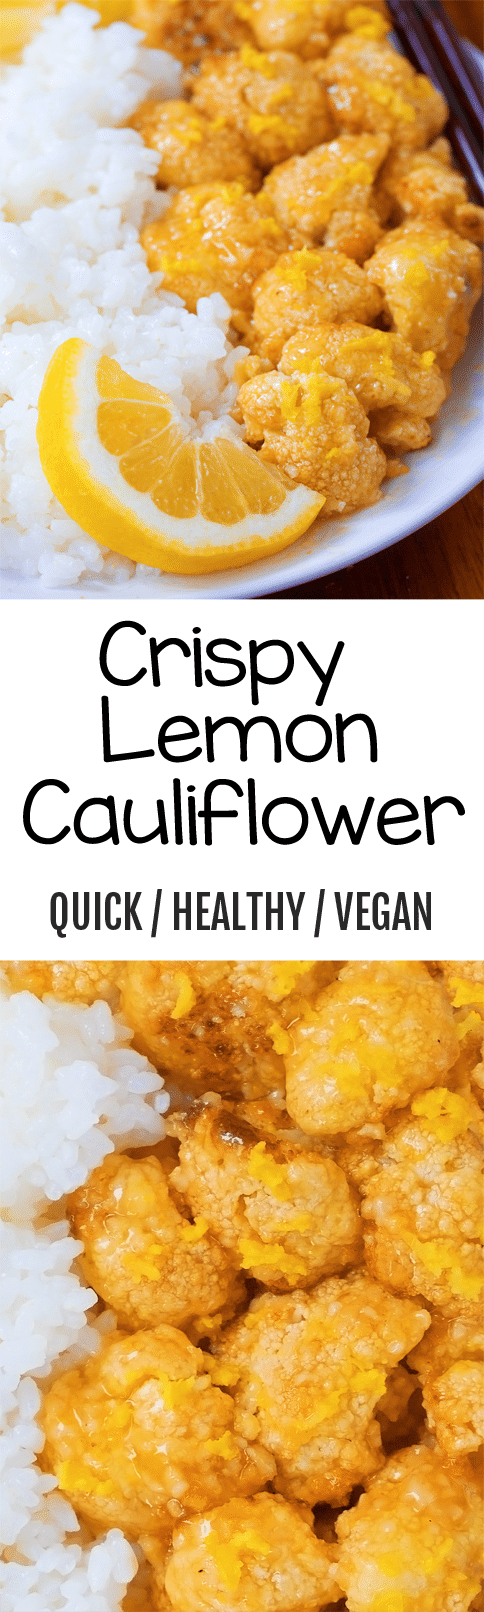 Crispy Lemon Cauliflower, this recipe was SO good!